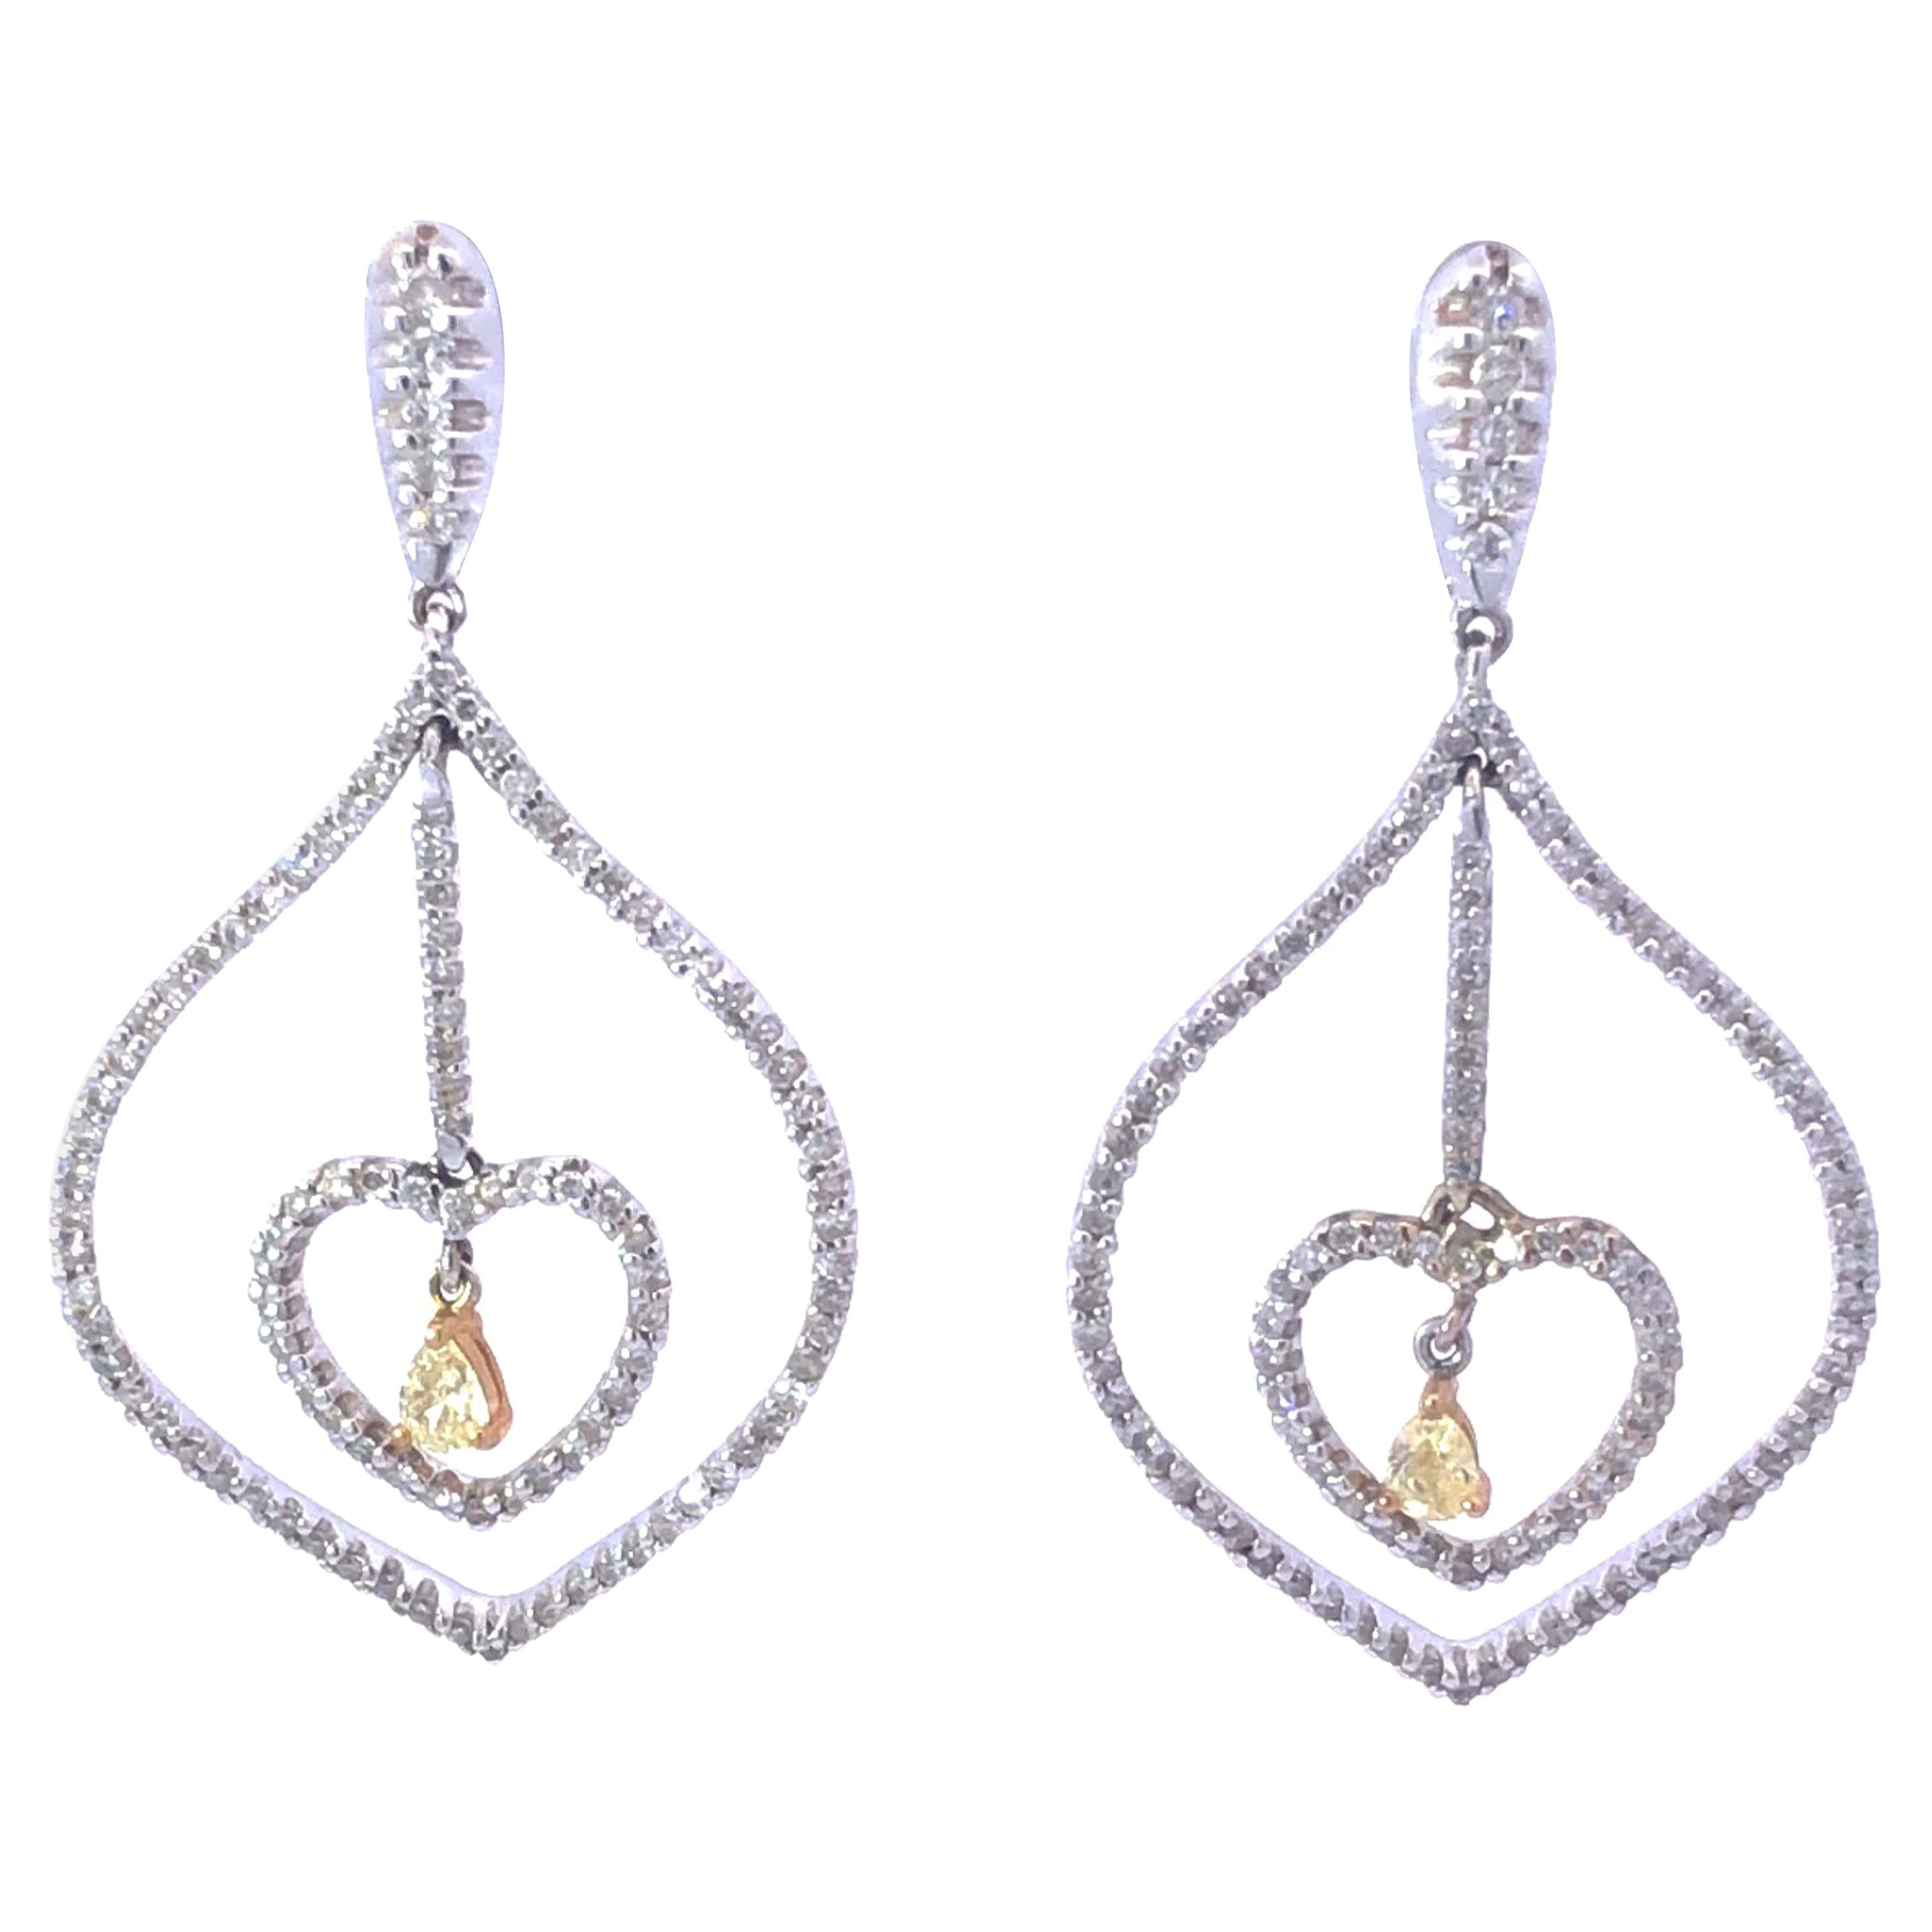 White and Fancy Yellow Dangly Diamond Heart Earrings in 18K White Gold